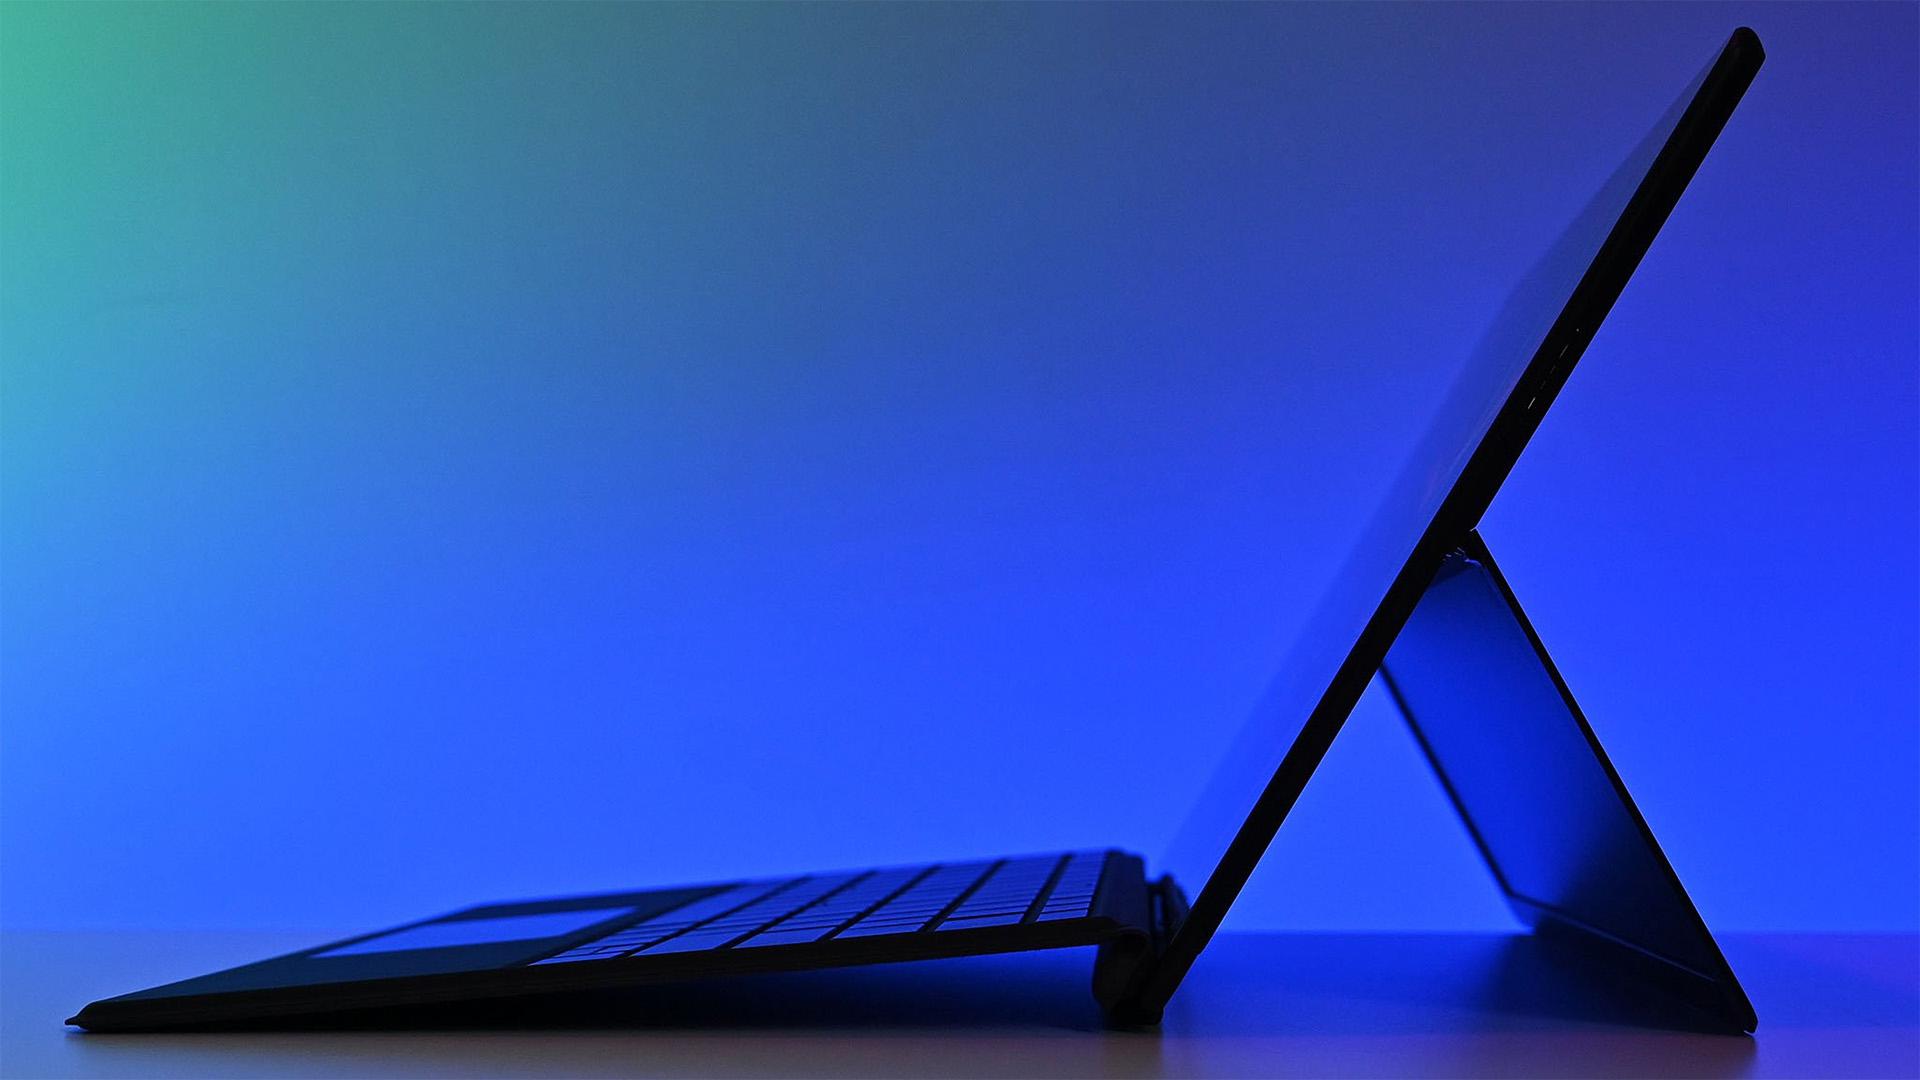 Surface Pro X on a blue background